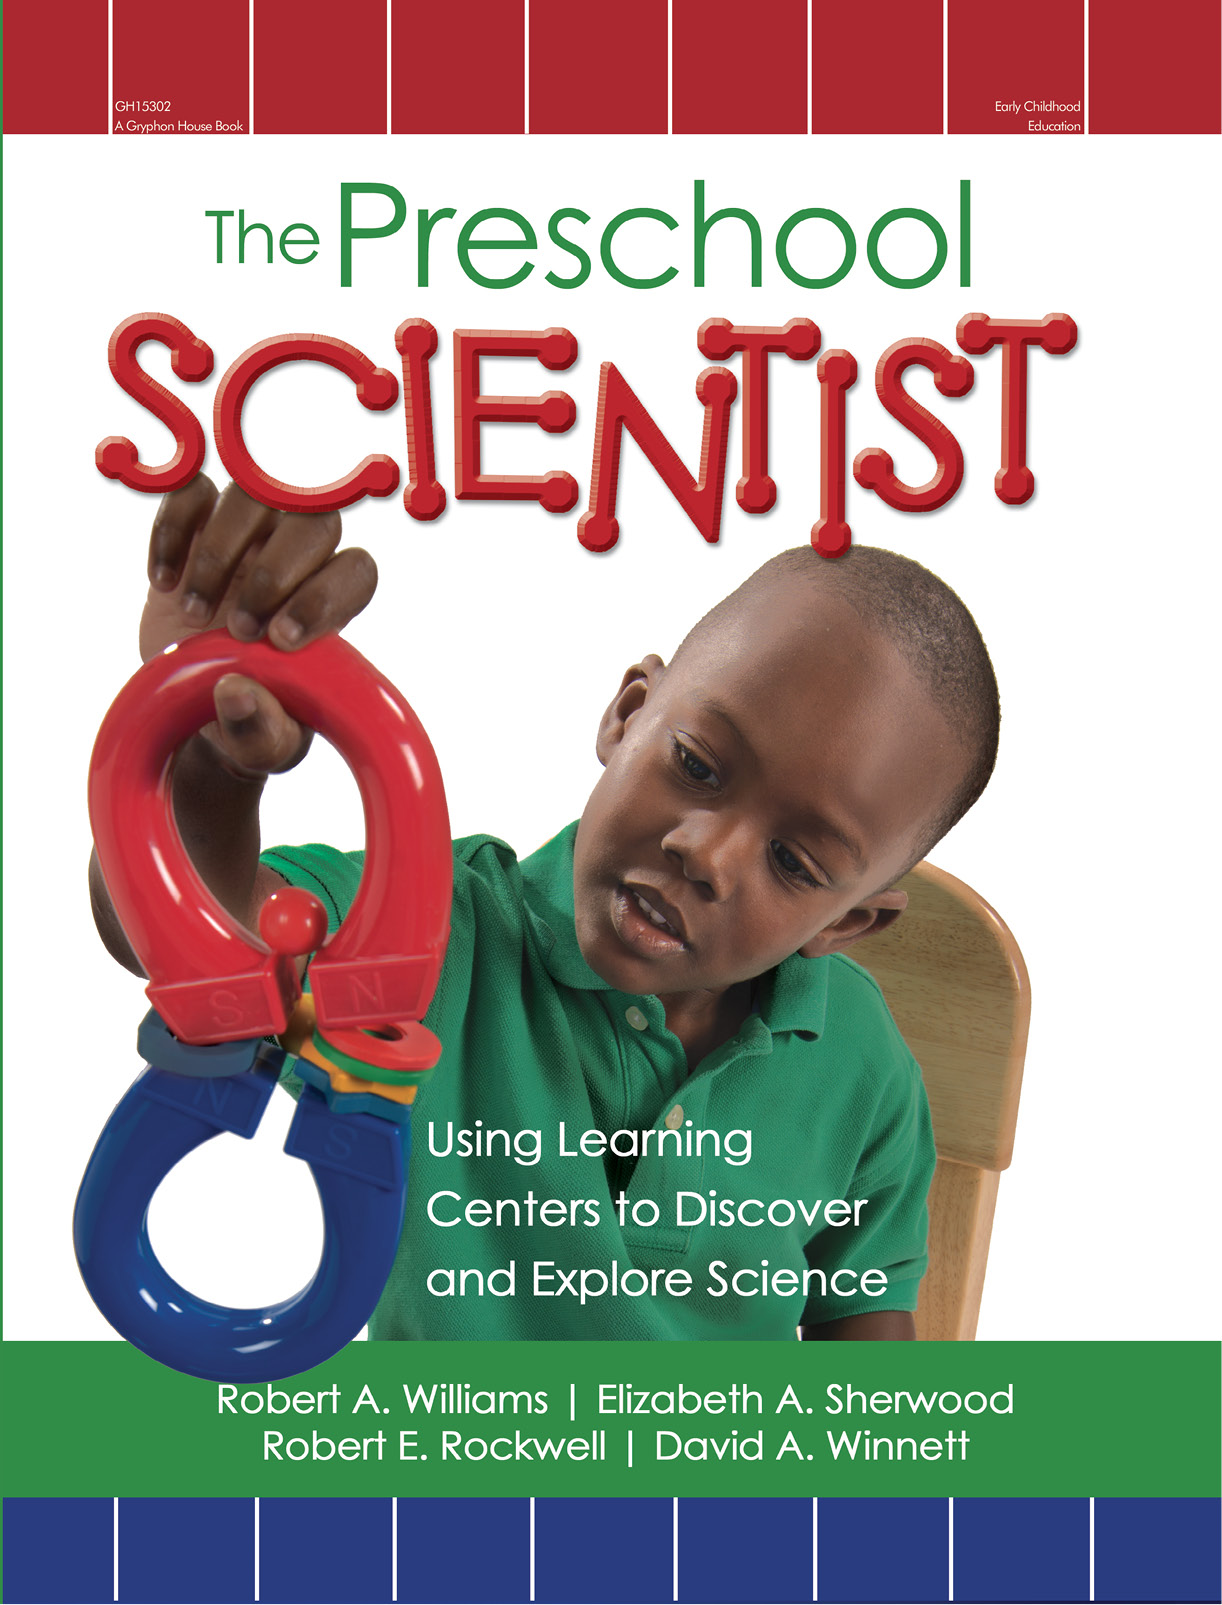 Contents The Preschool Scientist by Robert A Williams Elizabeth A Sherwood - photo 1